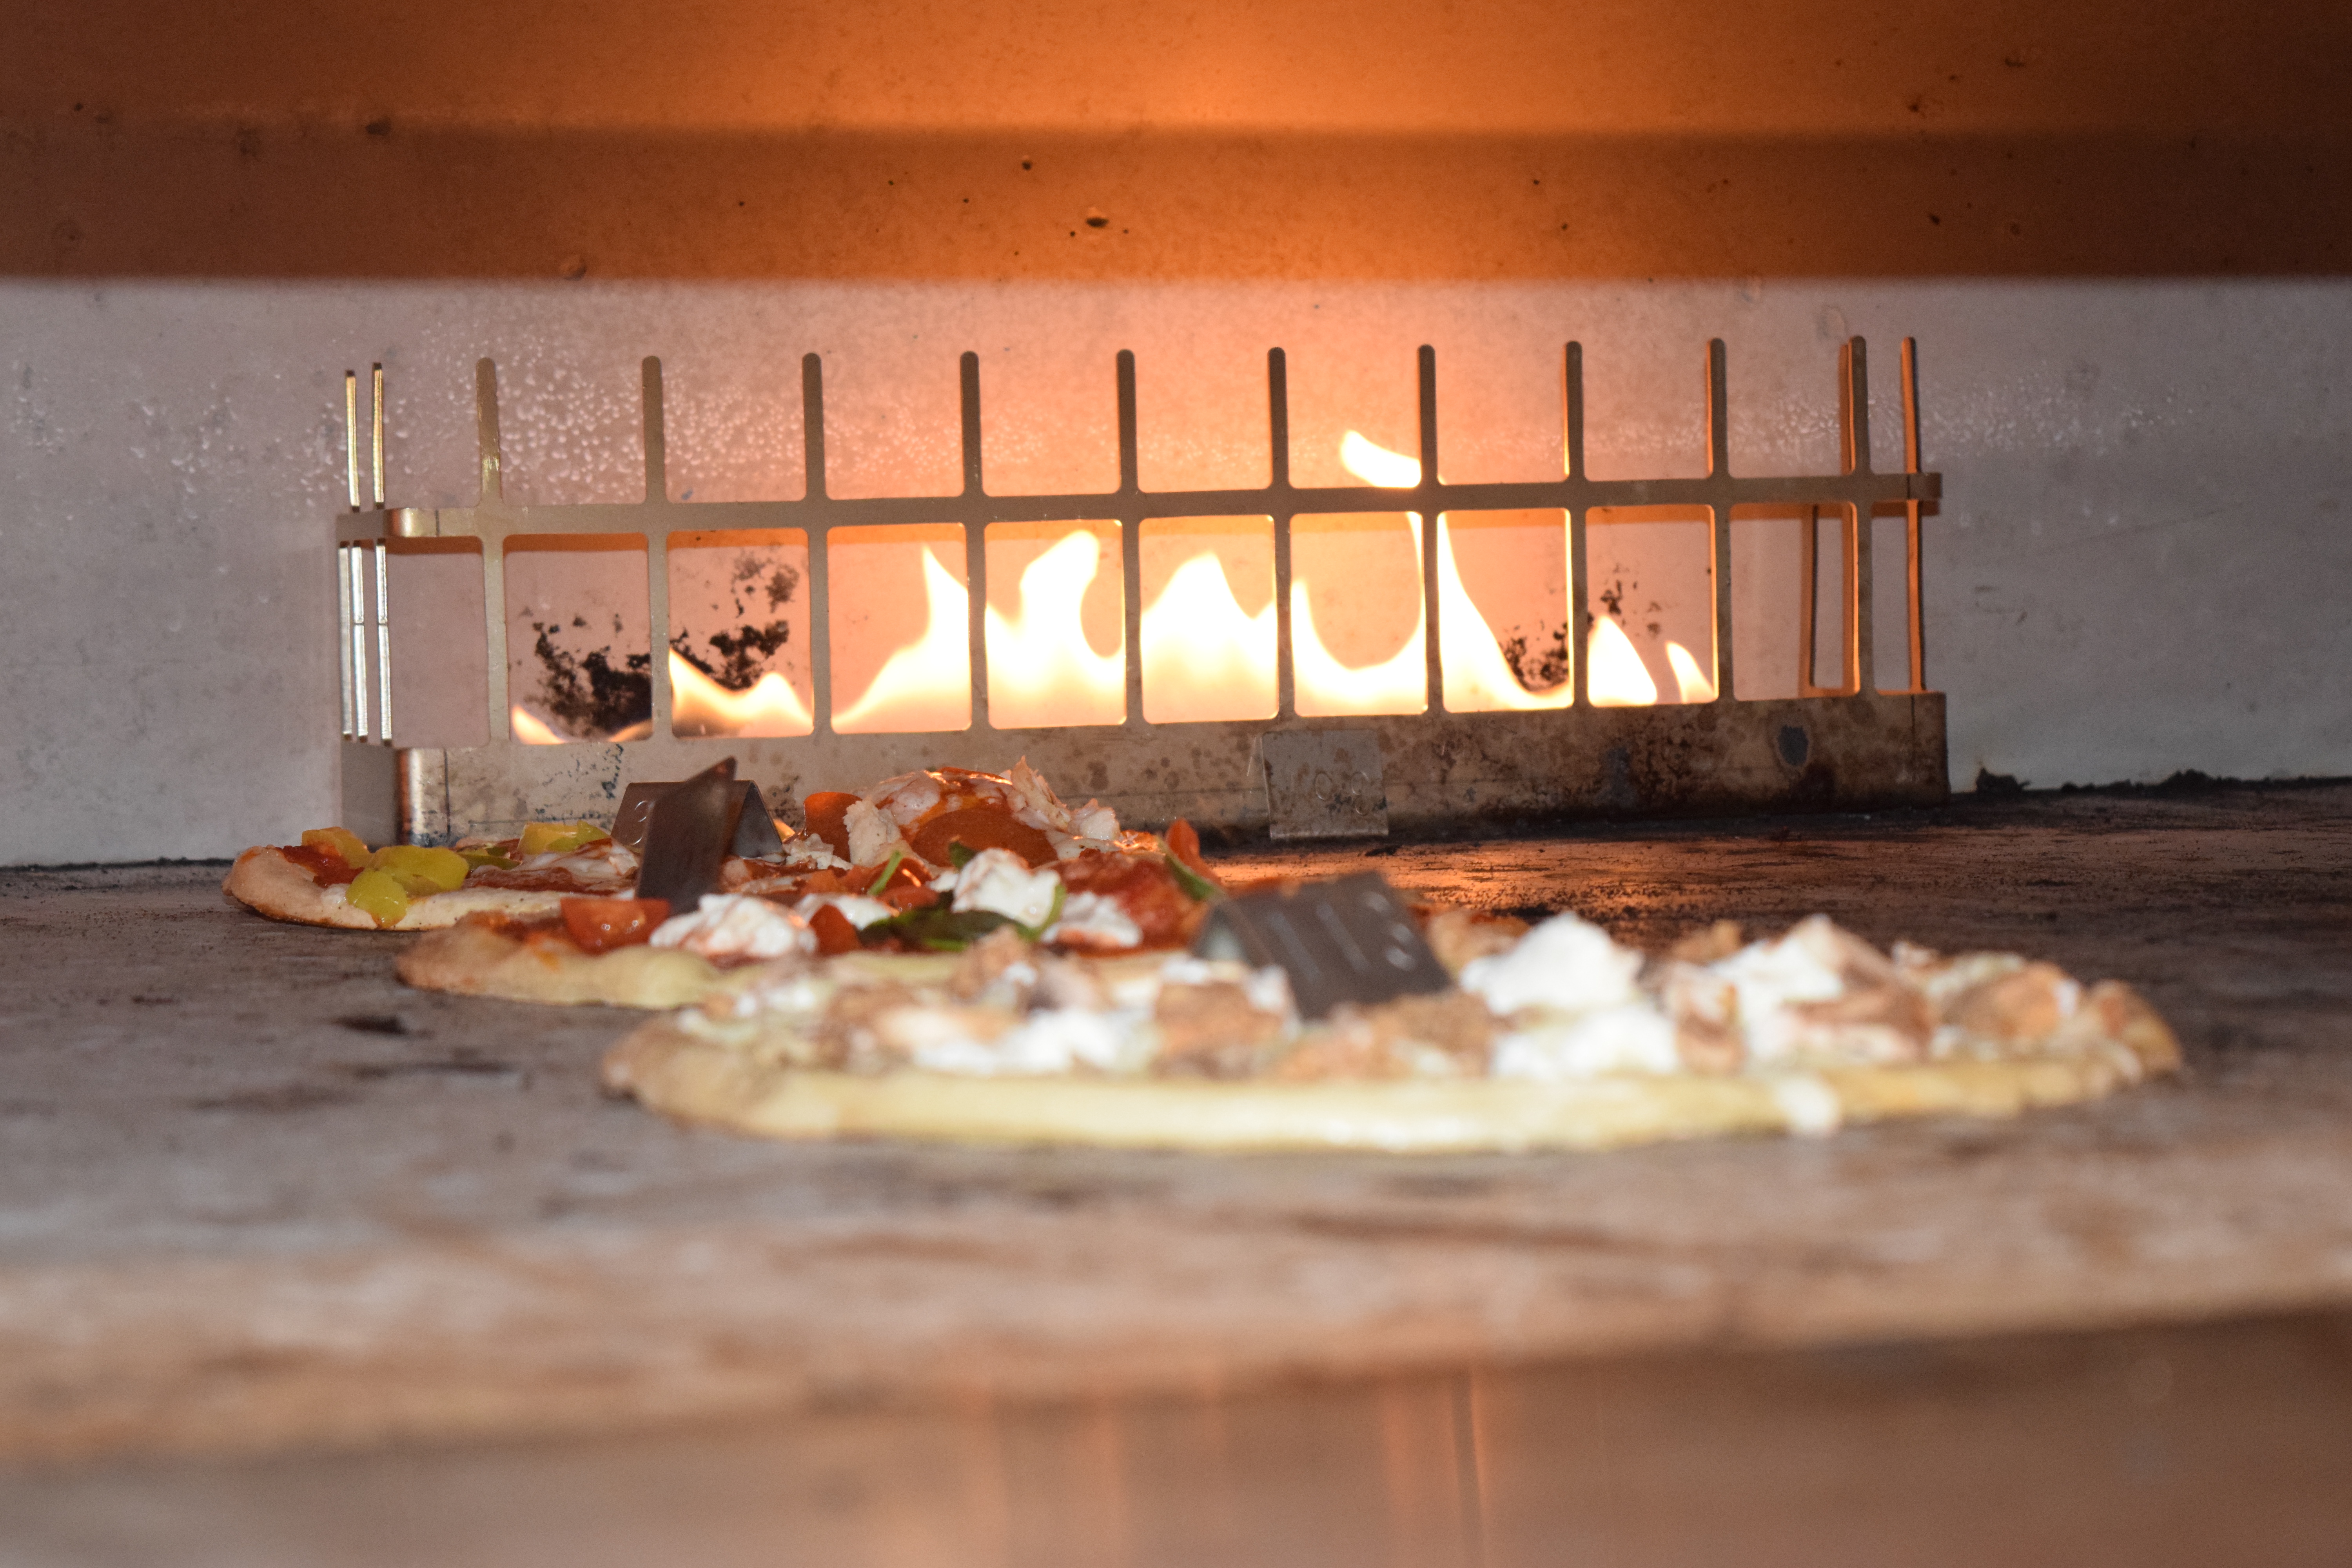 Blaze Fast Fire’d Pizza is Blazing Hot